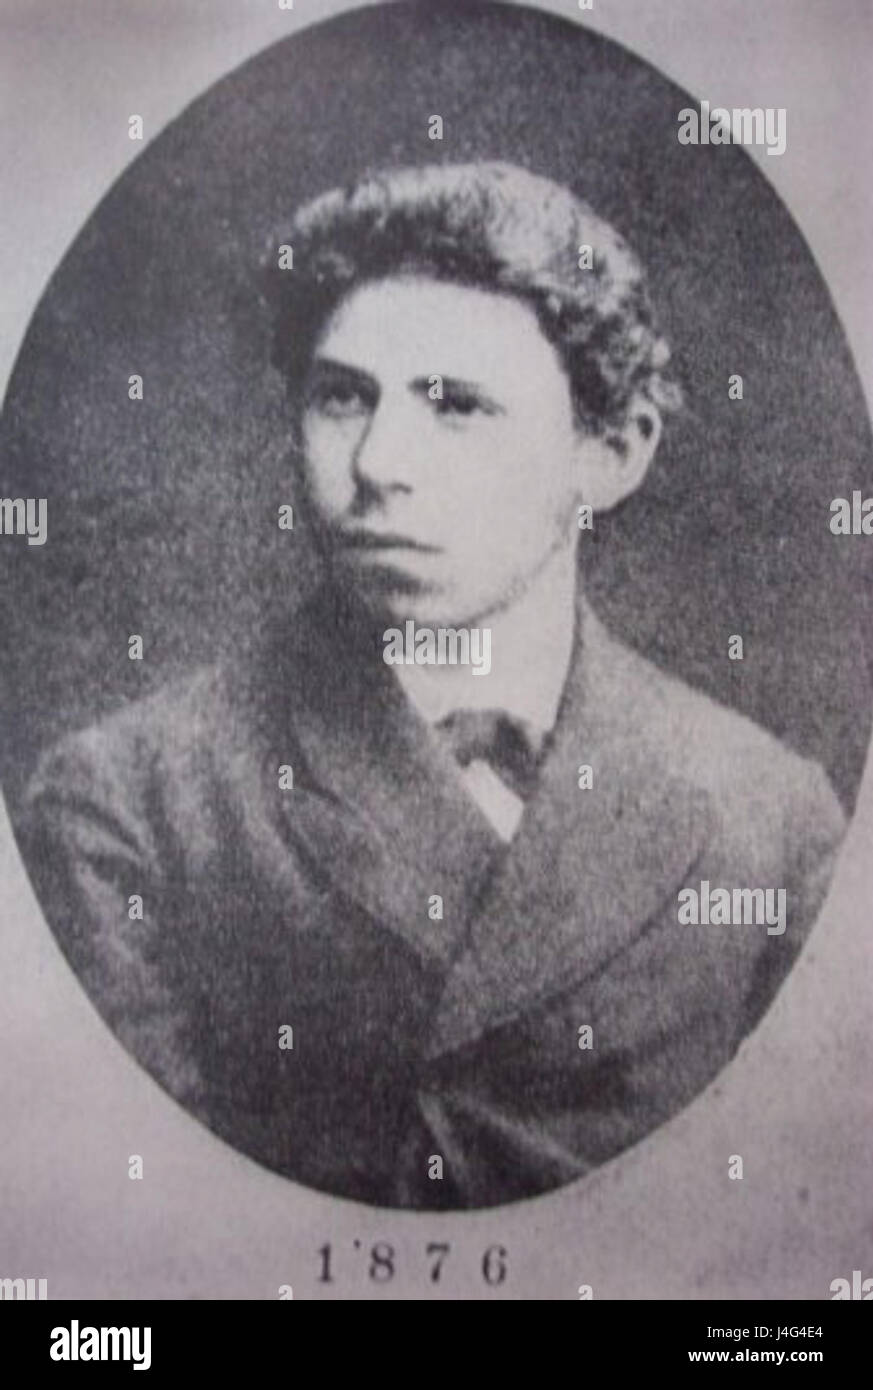 Szymon dickstein 1876 Stock Photo